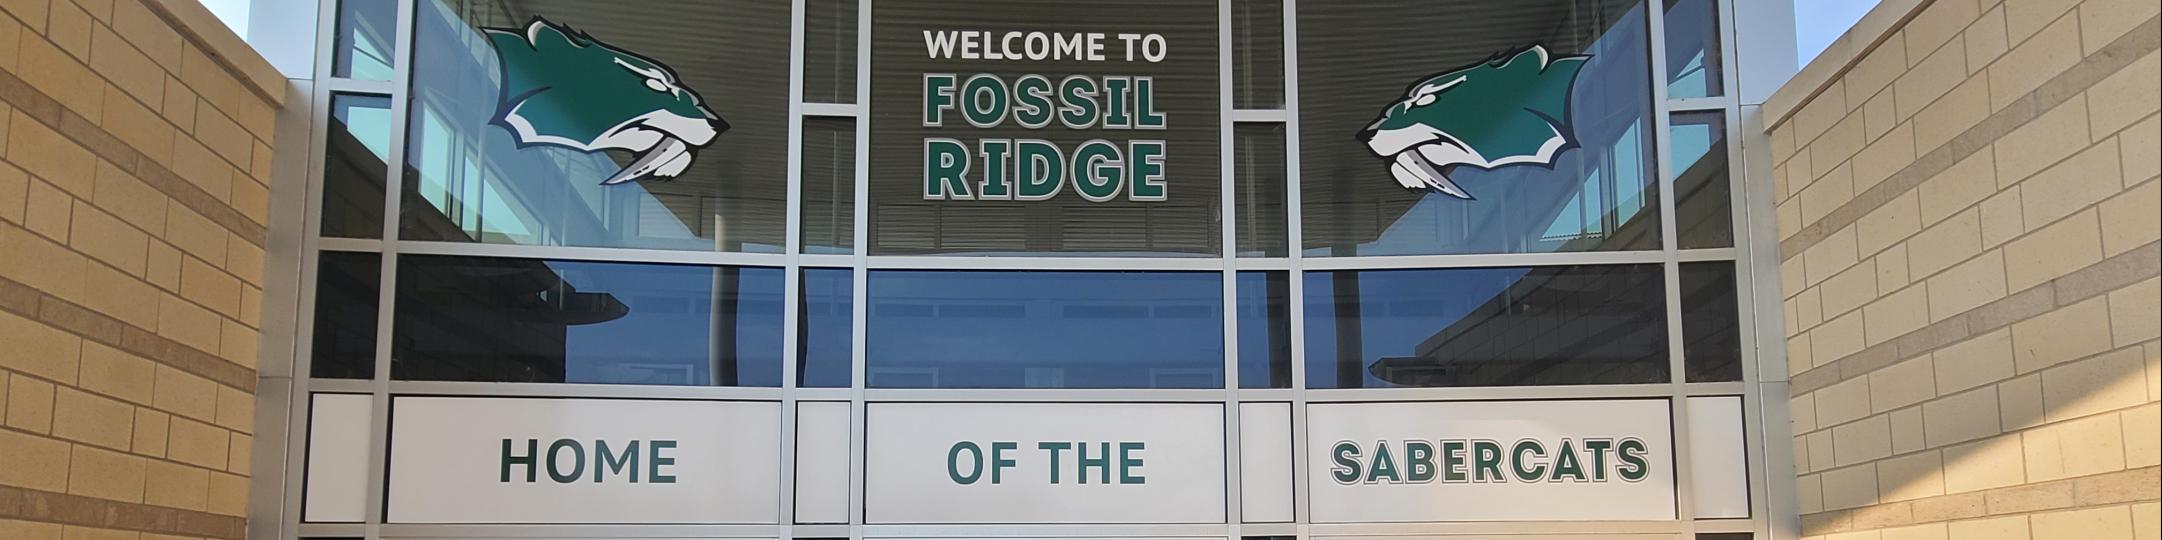 Fossil Ridge Main Entrance